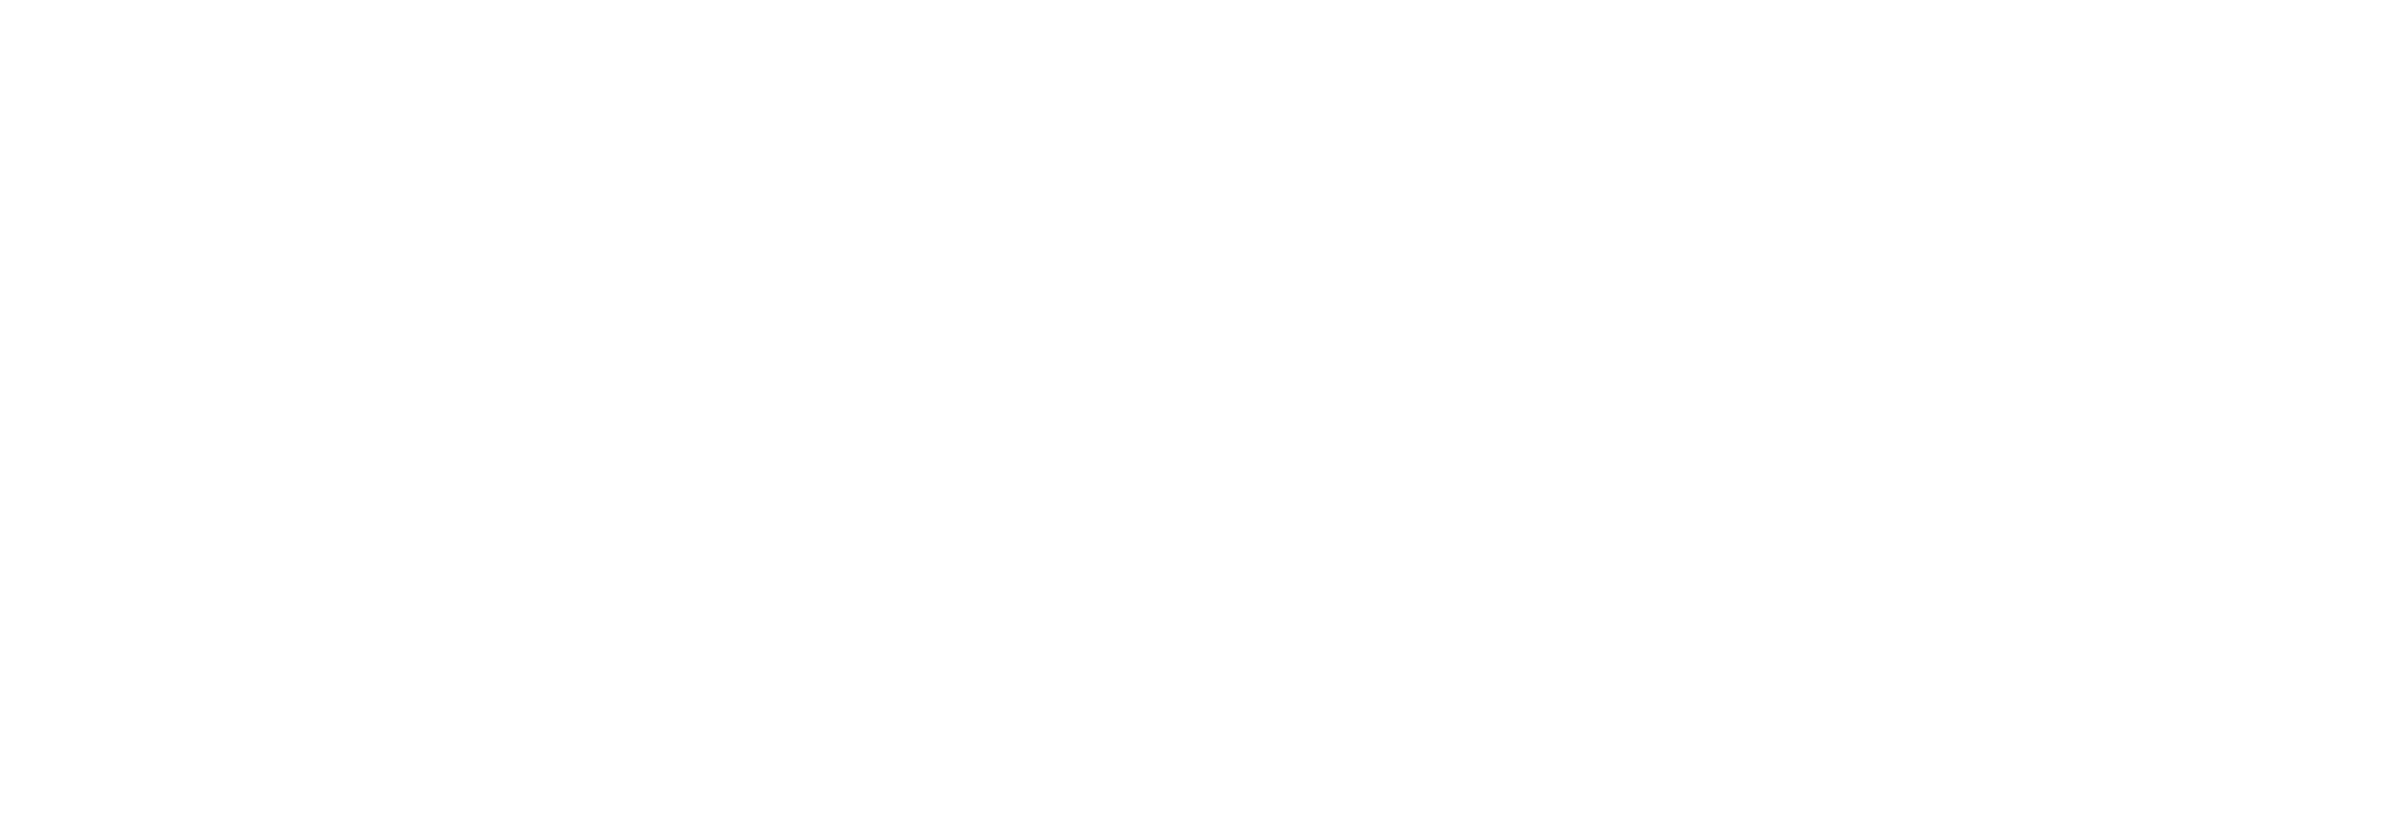 Nestlé logo in white